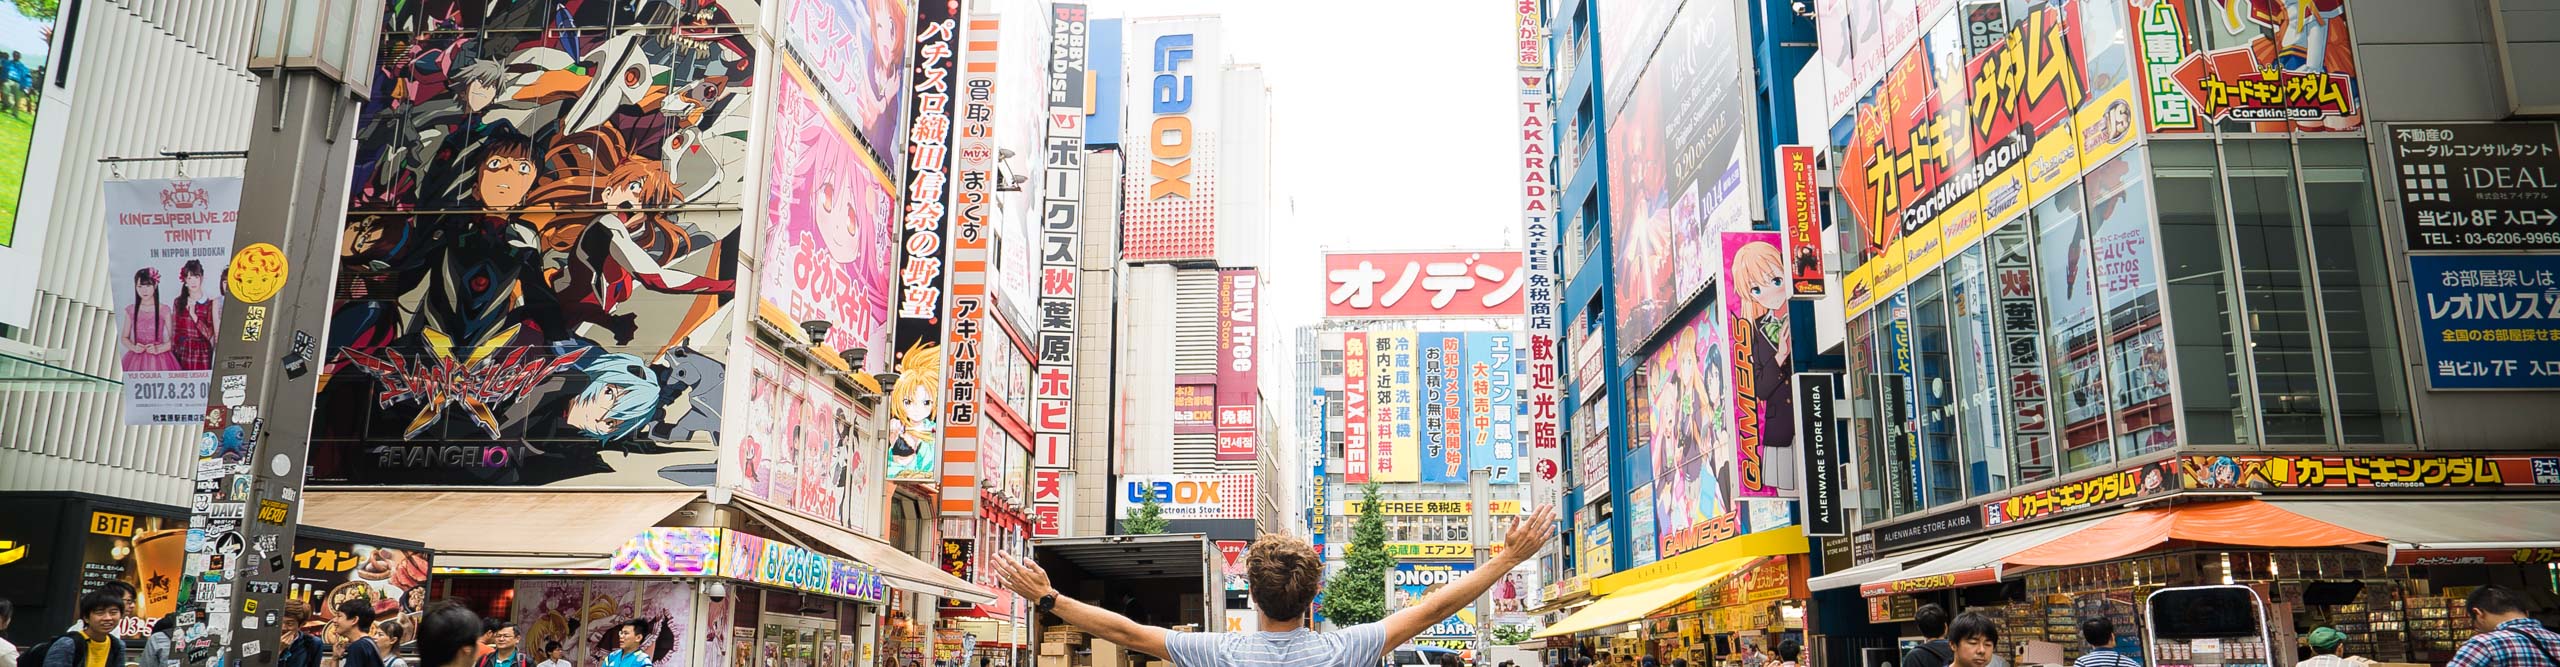 Tokyo to Osaka Tours with Intrepid Travel